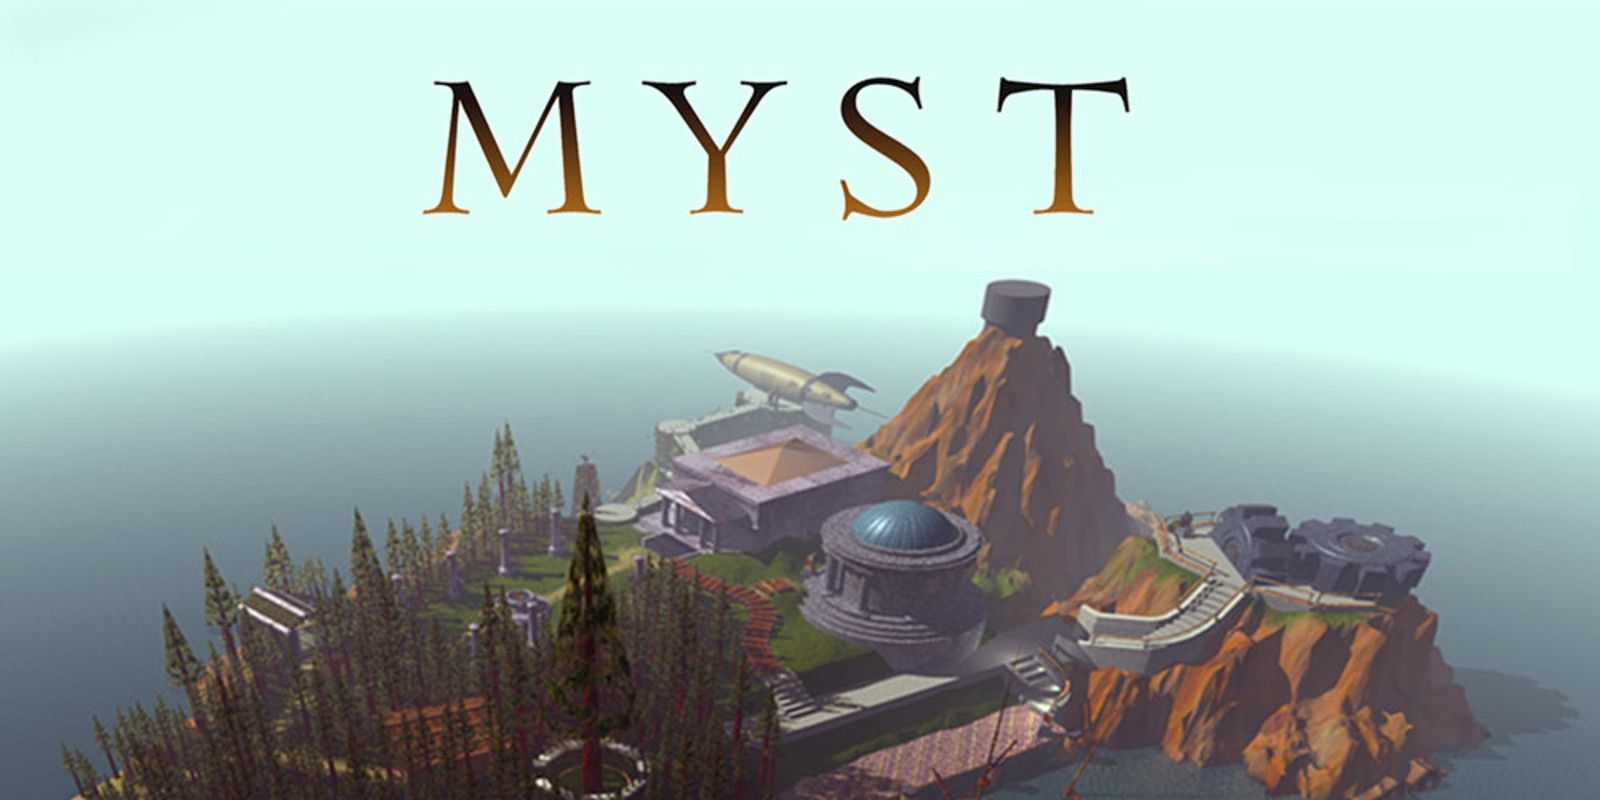 myst video game